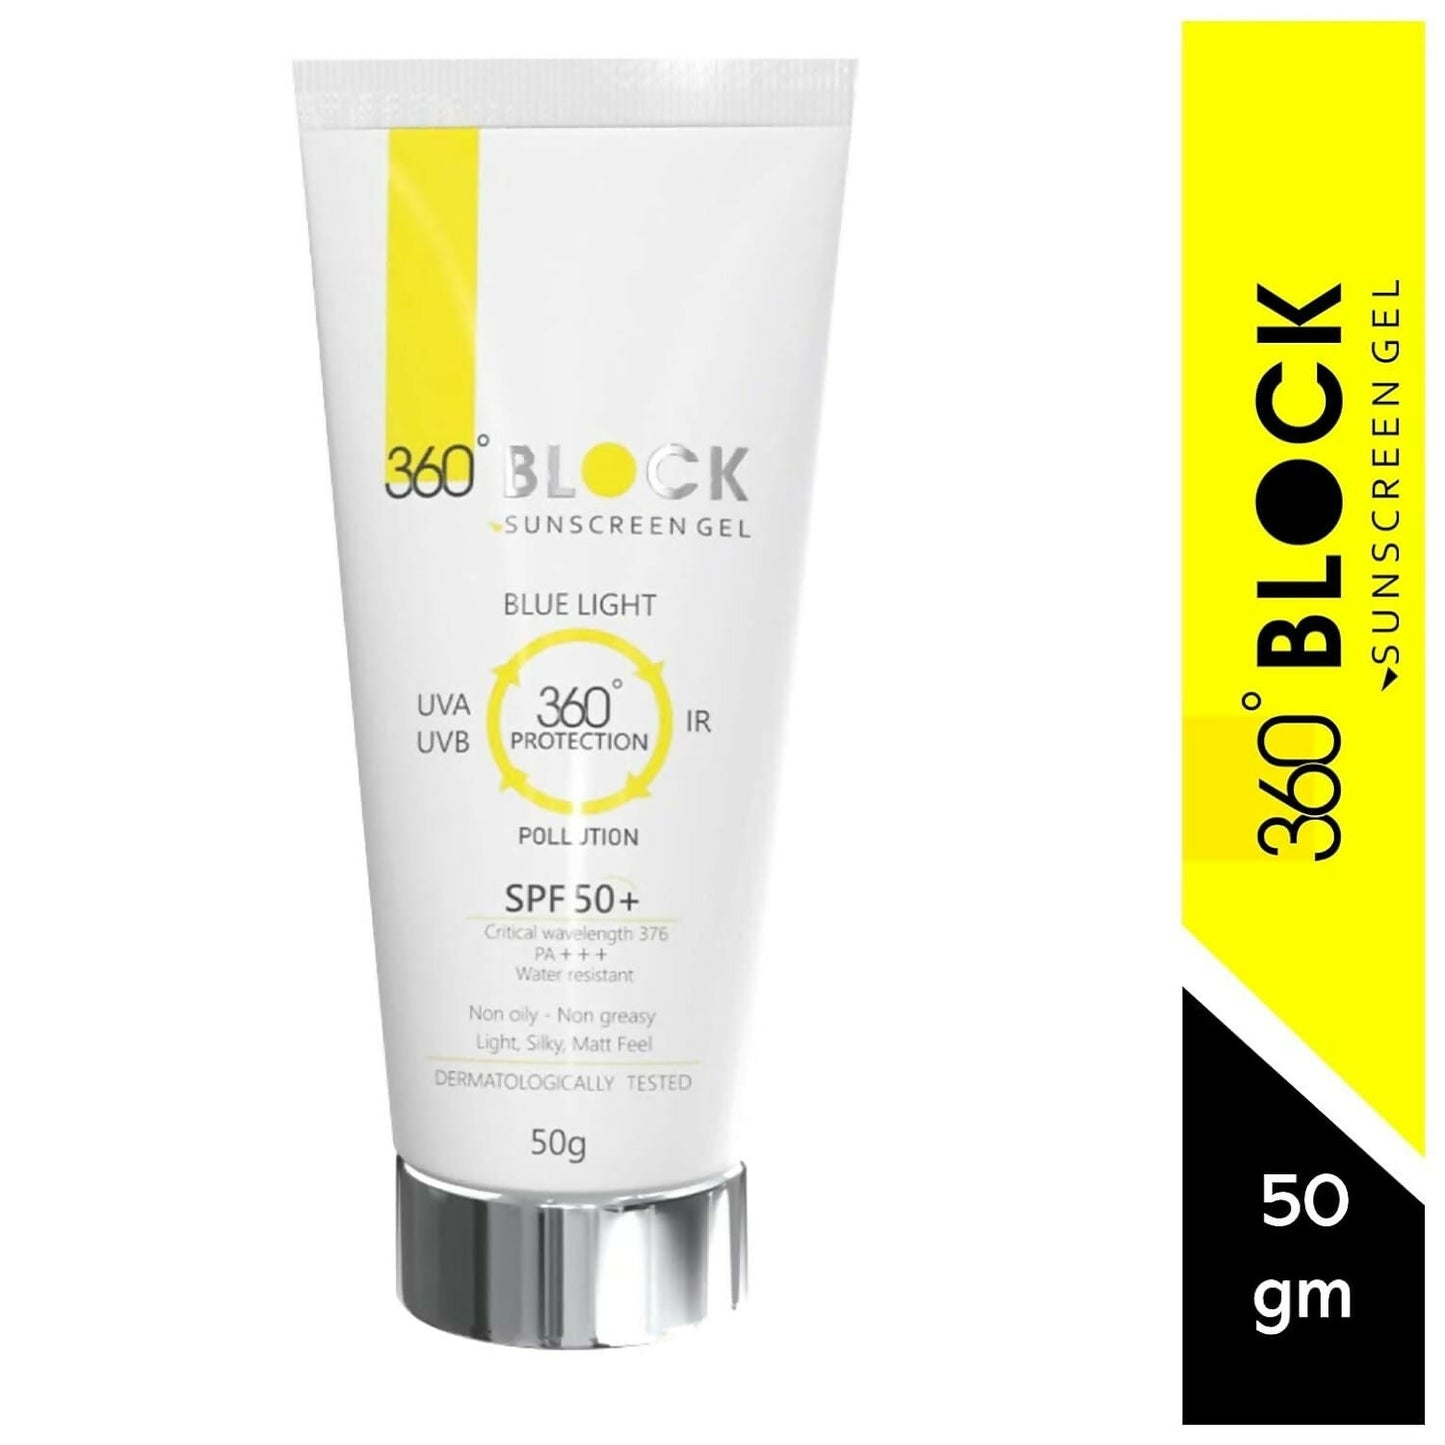 360 Block Sunscreen Gel SPF 50+, PA+++ UVA/UVB/IR